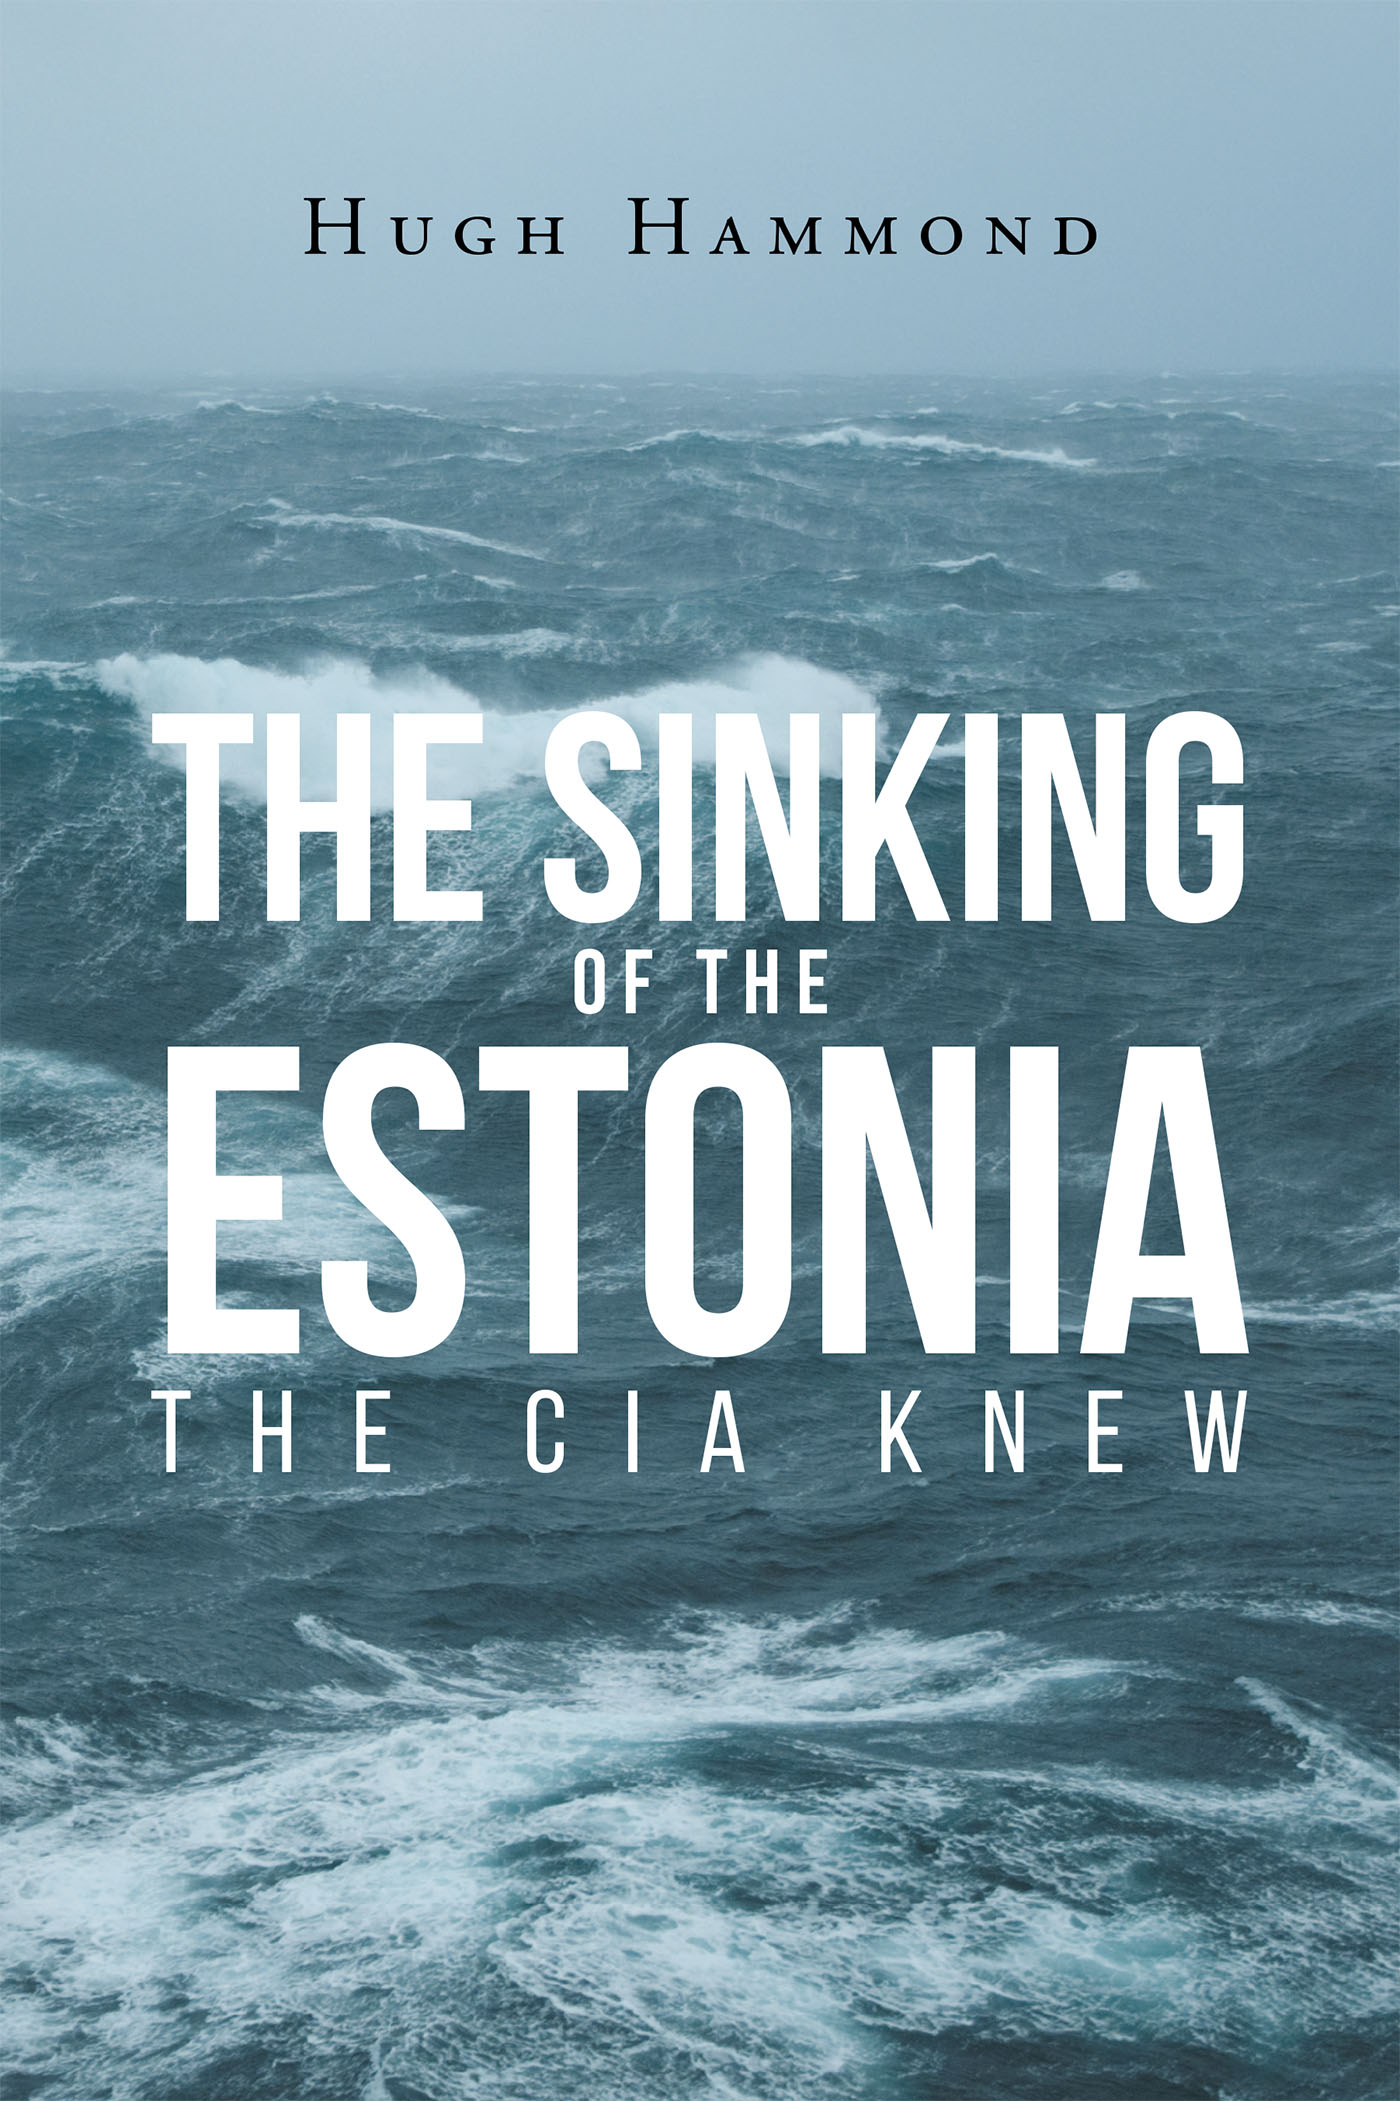 Author Hugh Hammond S New Book The Sinking Of The Estonia